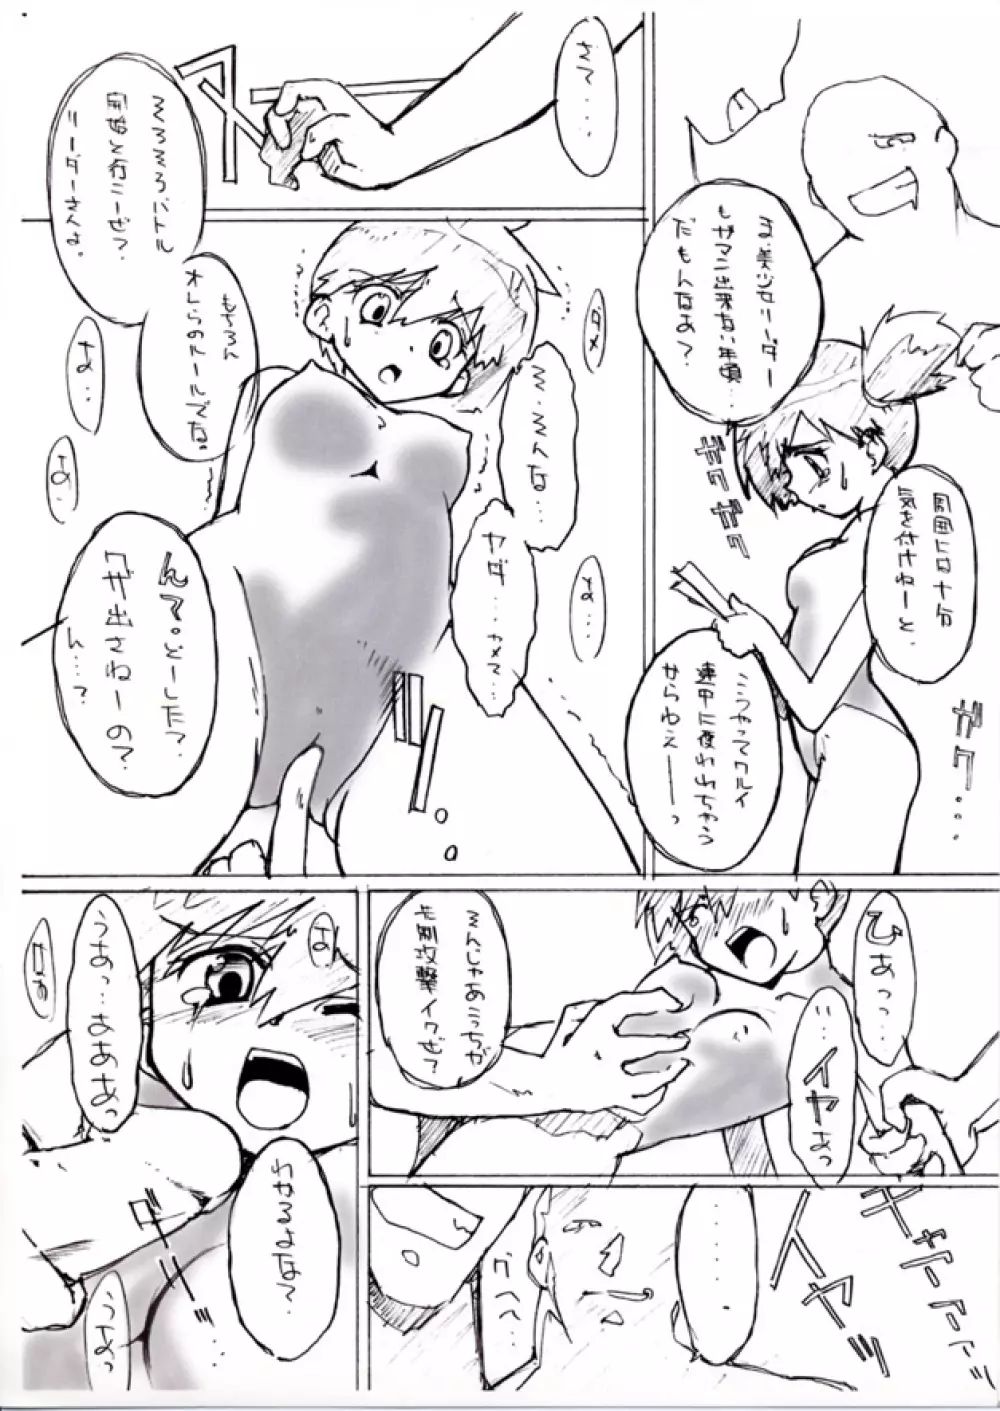 KASUMIX XPLOSION Kasumi Comic part5 - page5